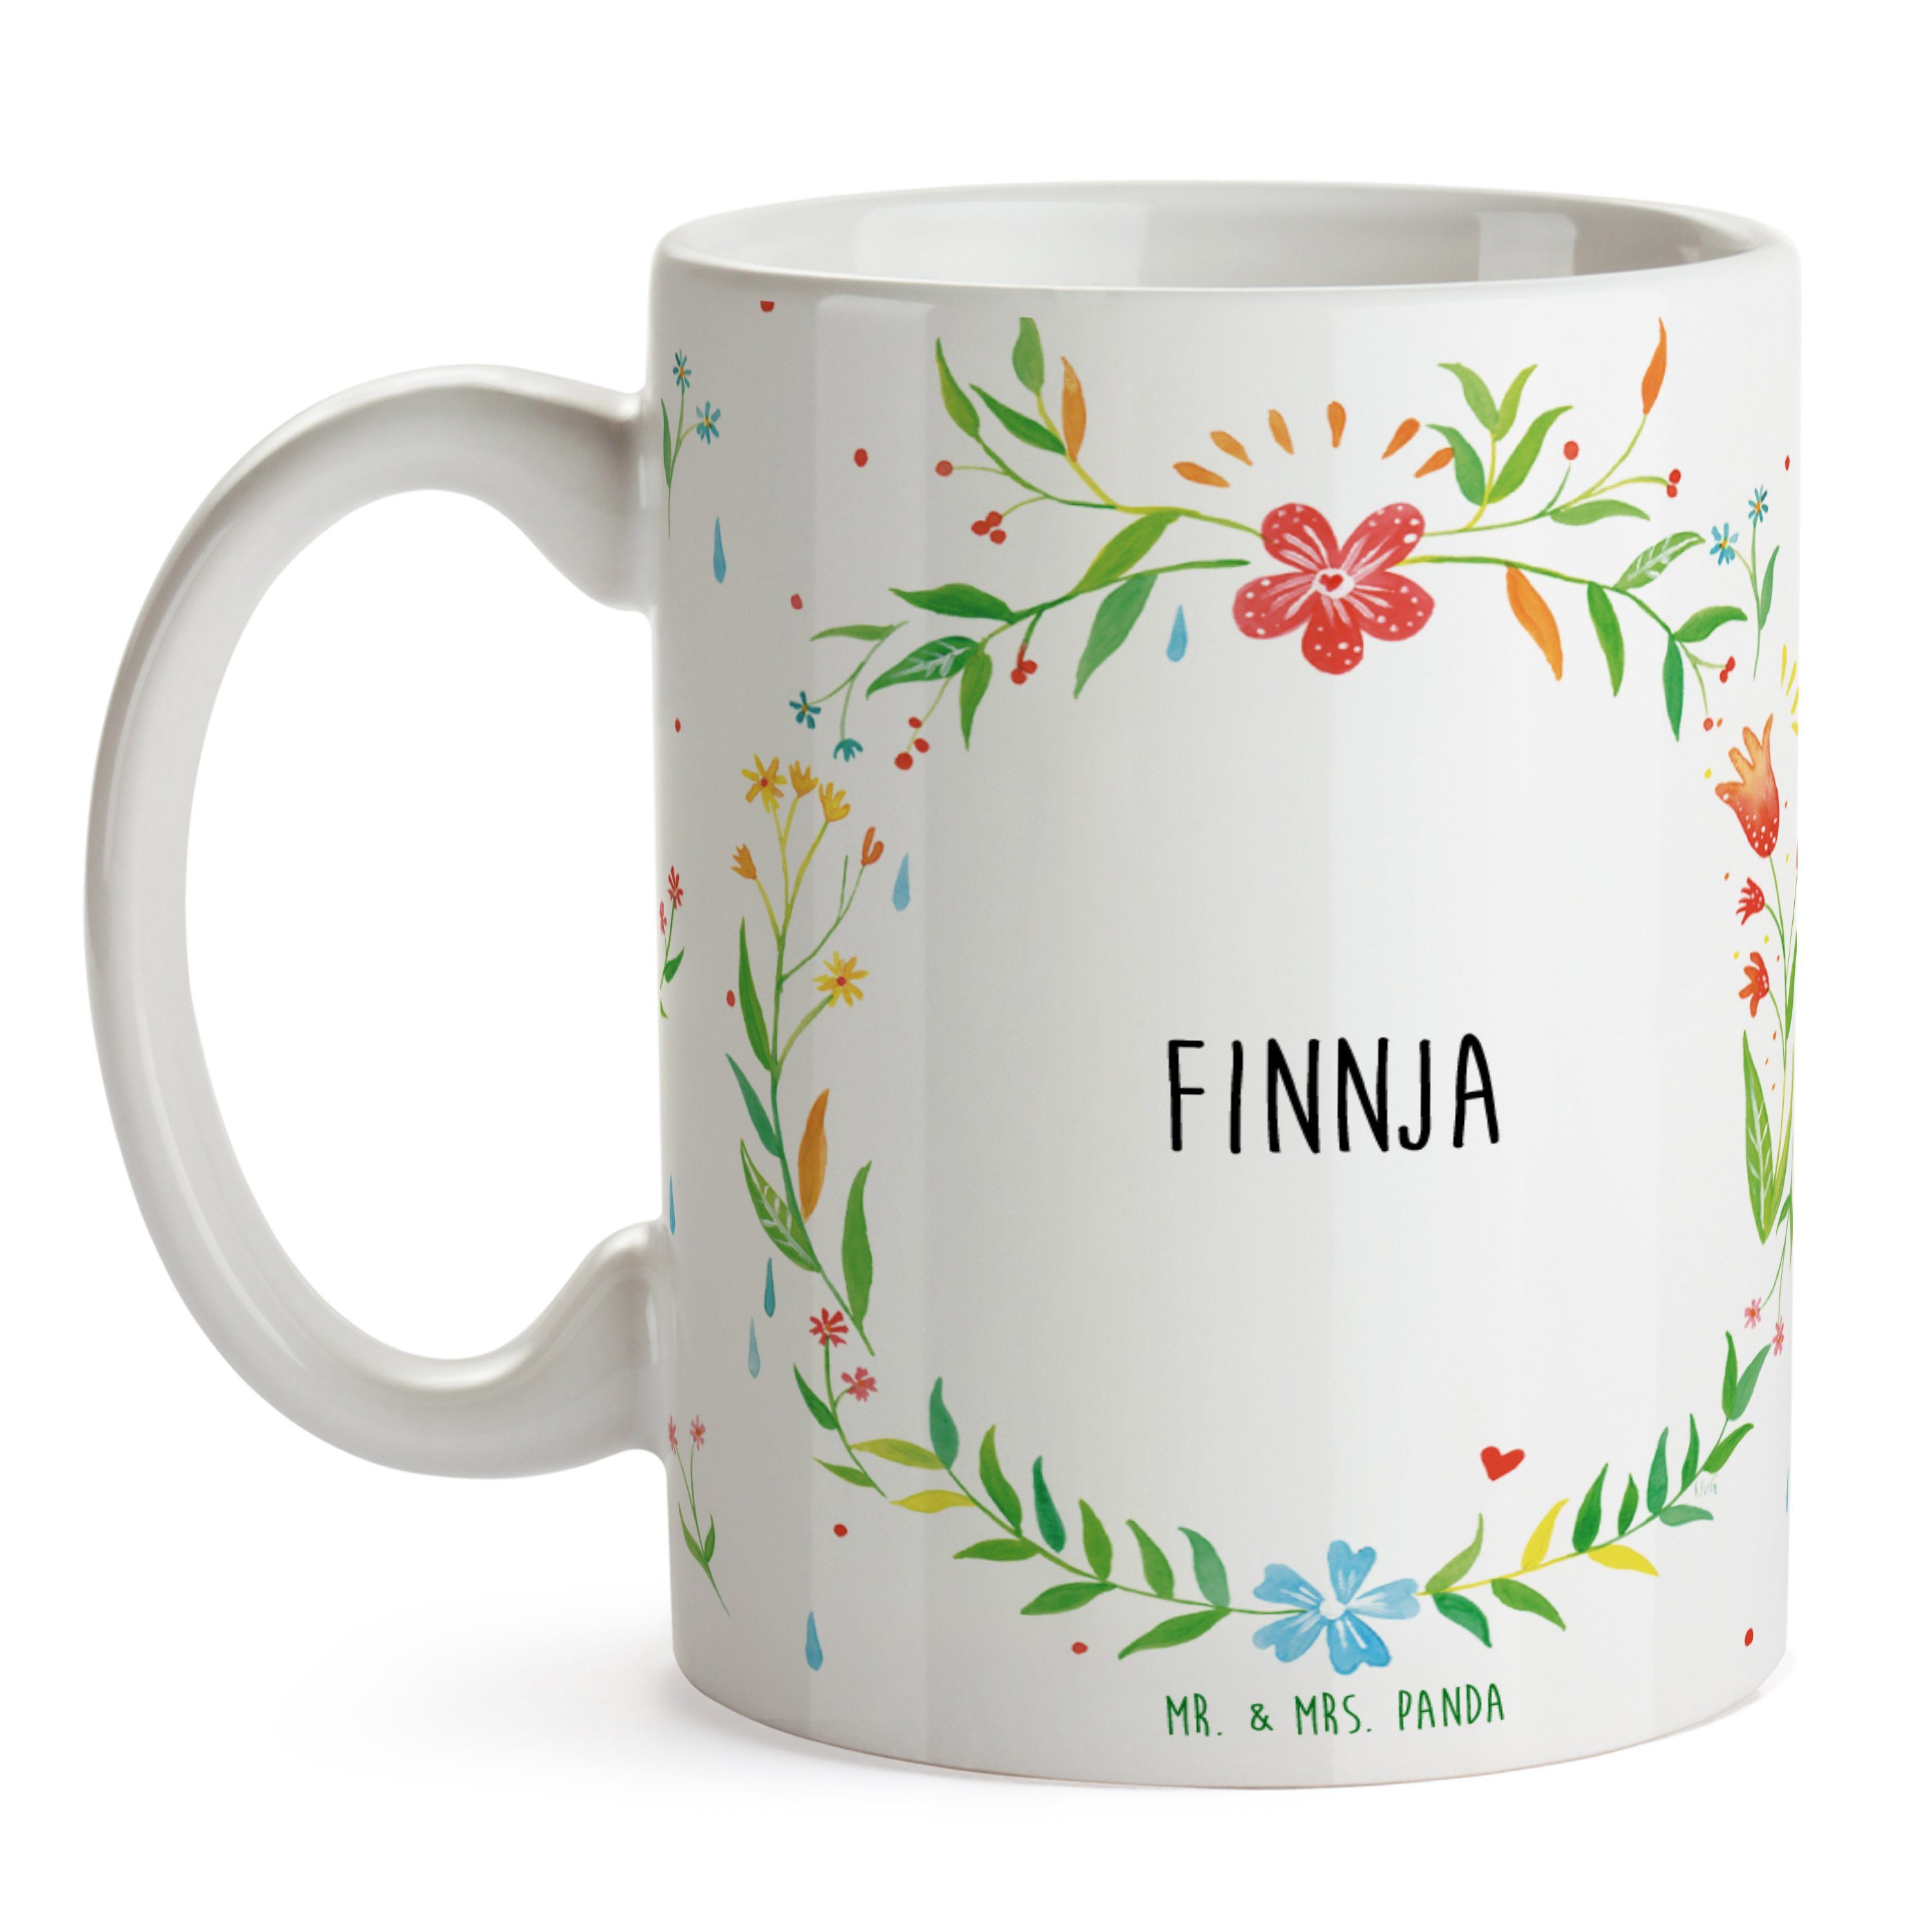 Mr. & Mrs. Panda Tasse, Büro Finnja Tasse, Geschenk, - Keramiktasse, Kaffeebe, Tasse Geschenk Keramik